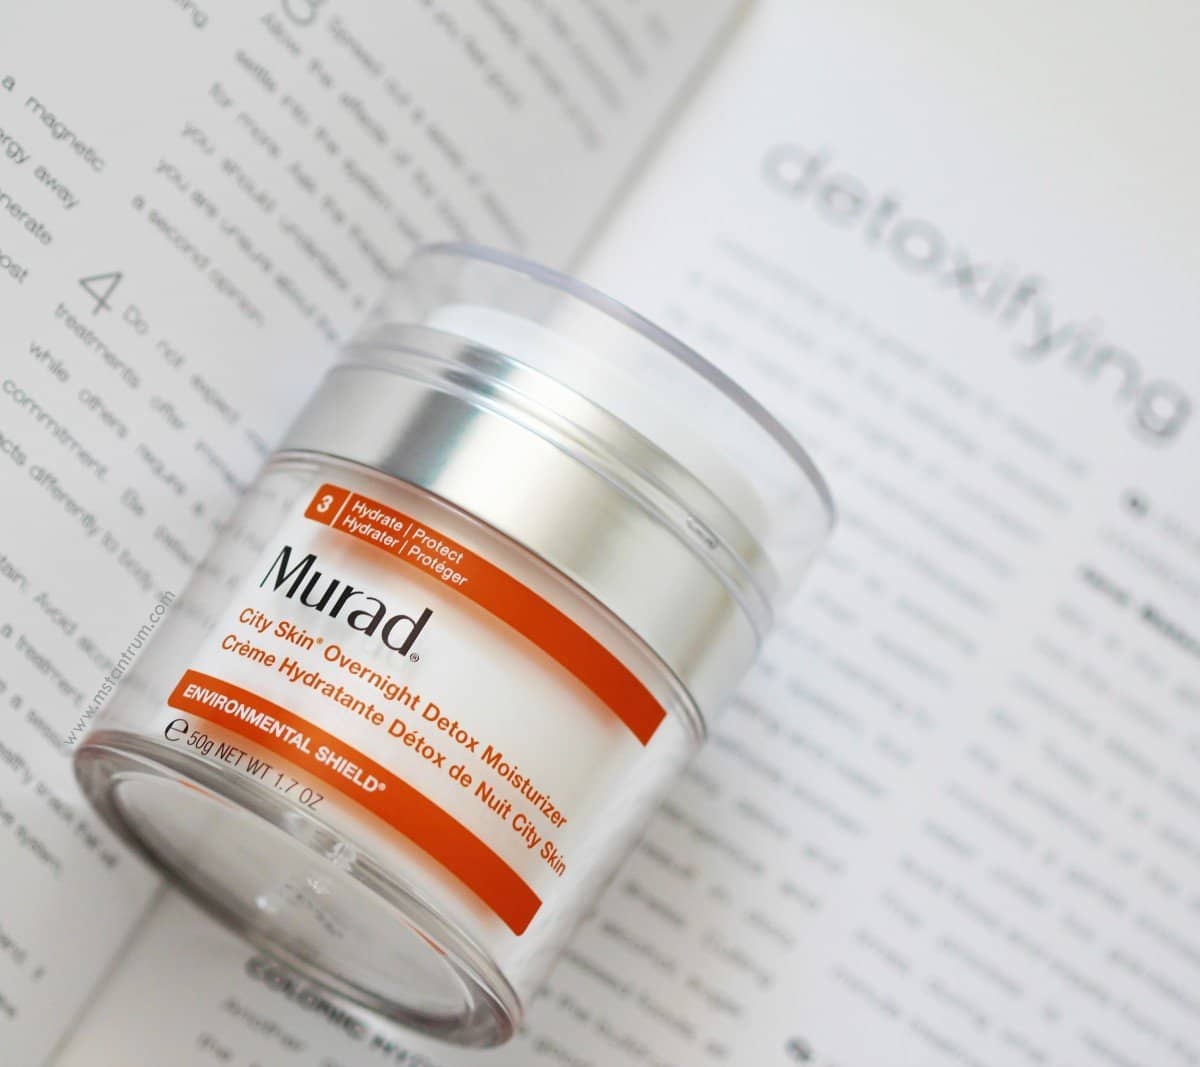 Murad city skin overnight detox moisturizer Review